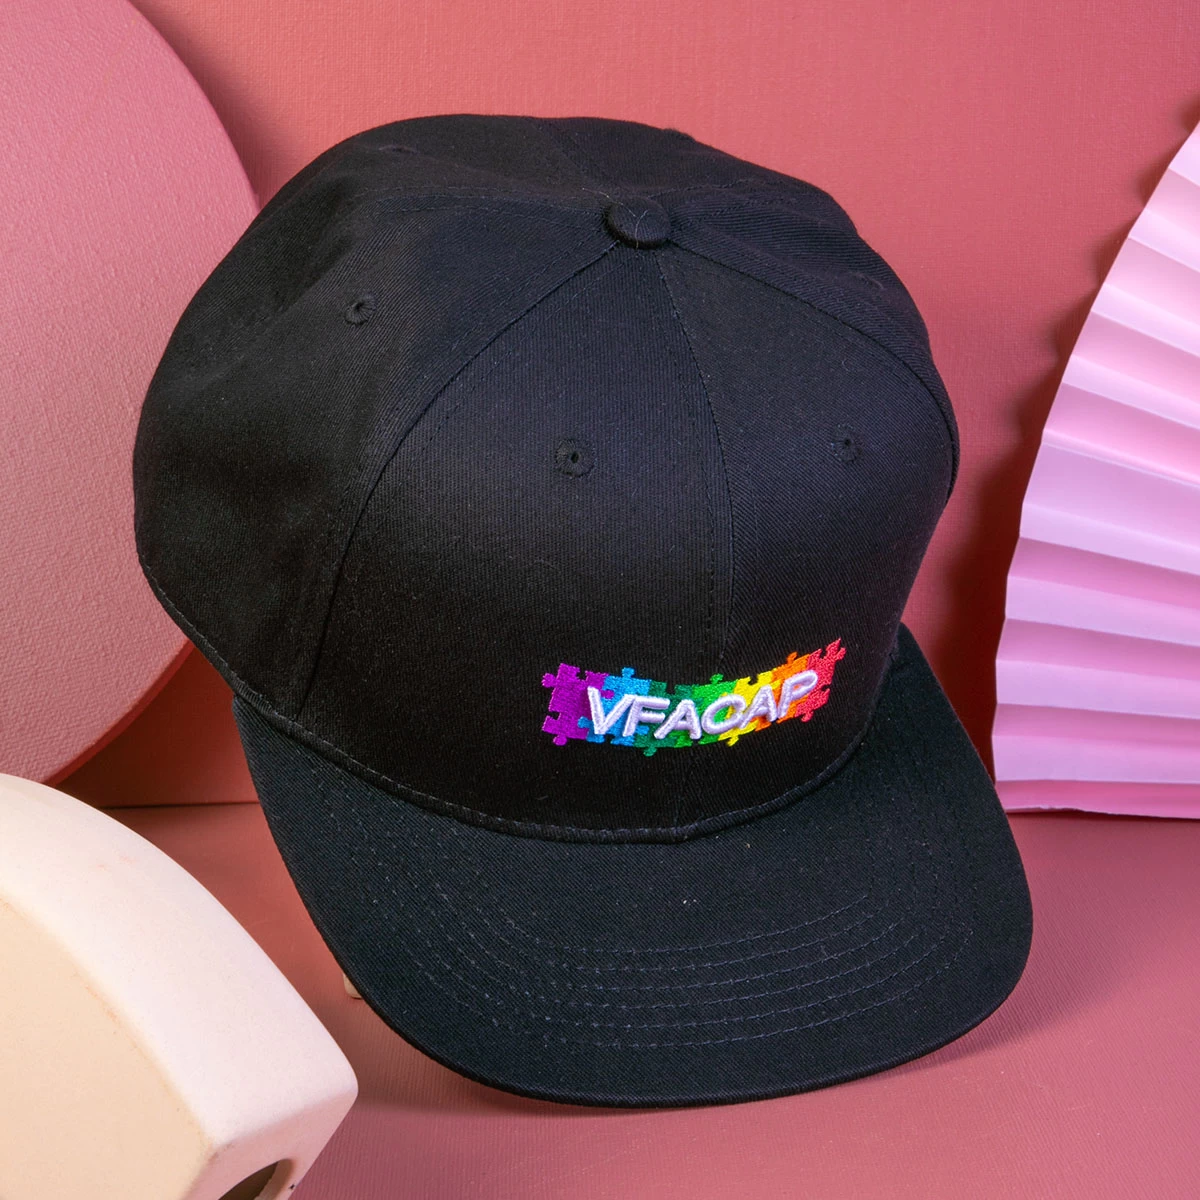 embroidery vfacap snapback hats